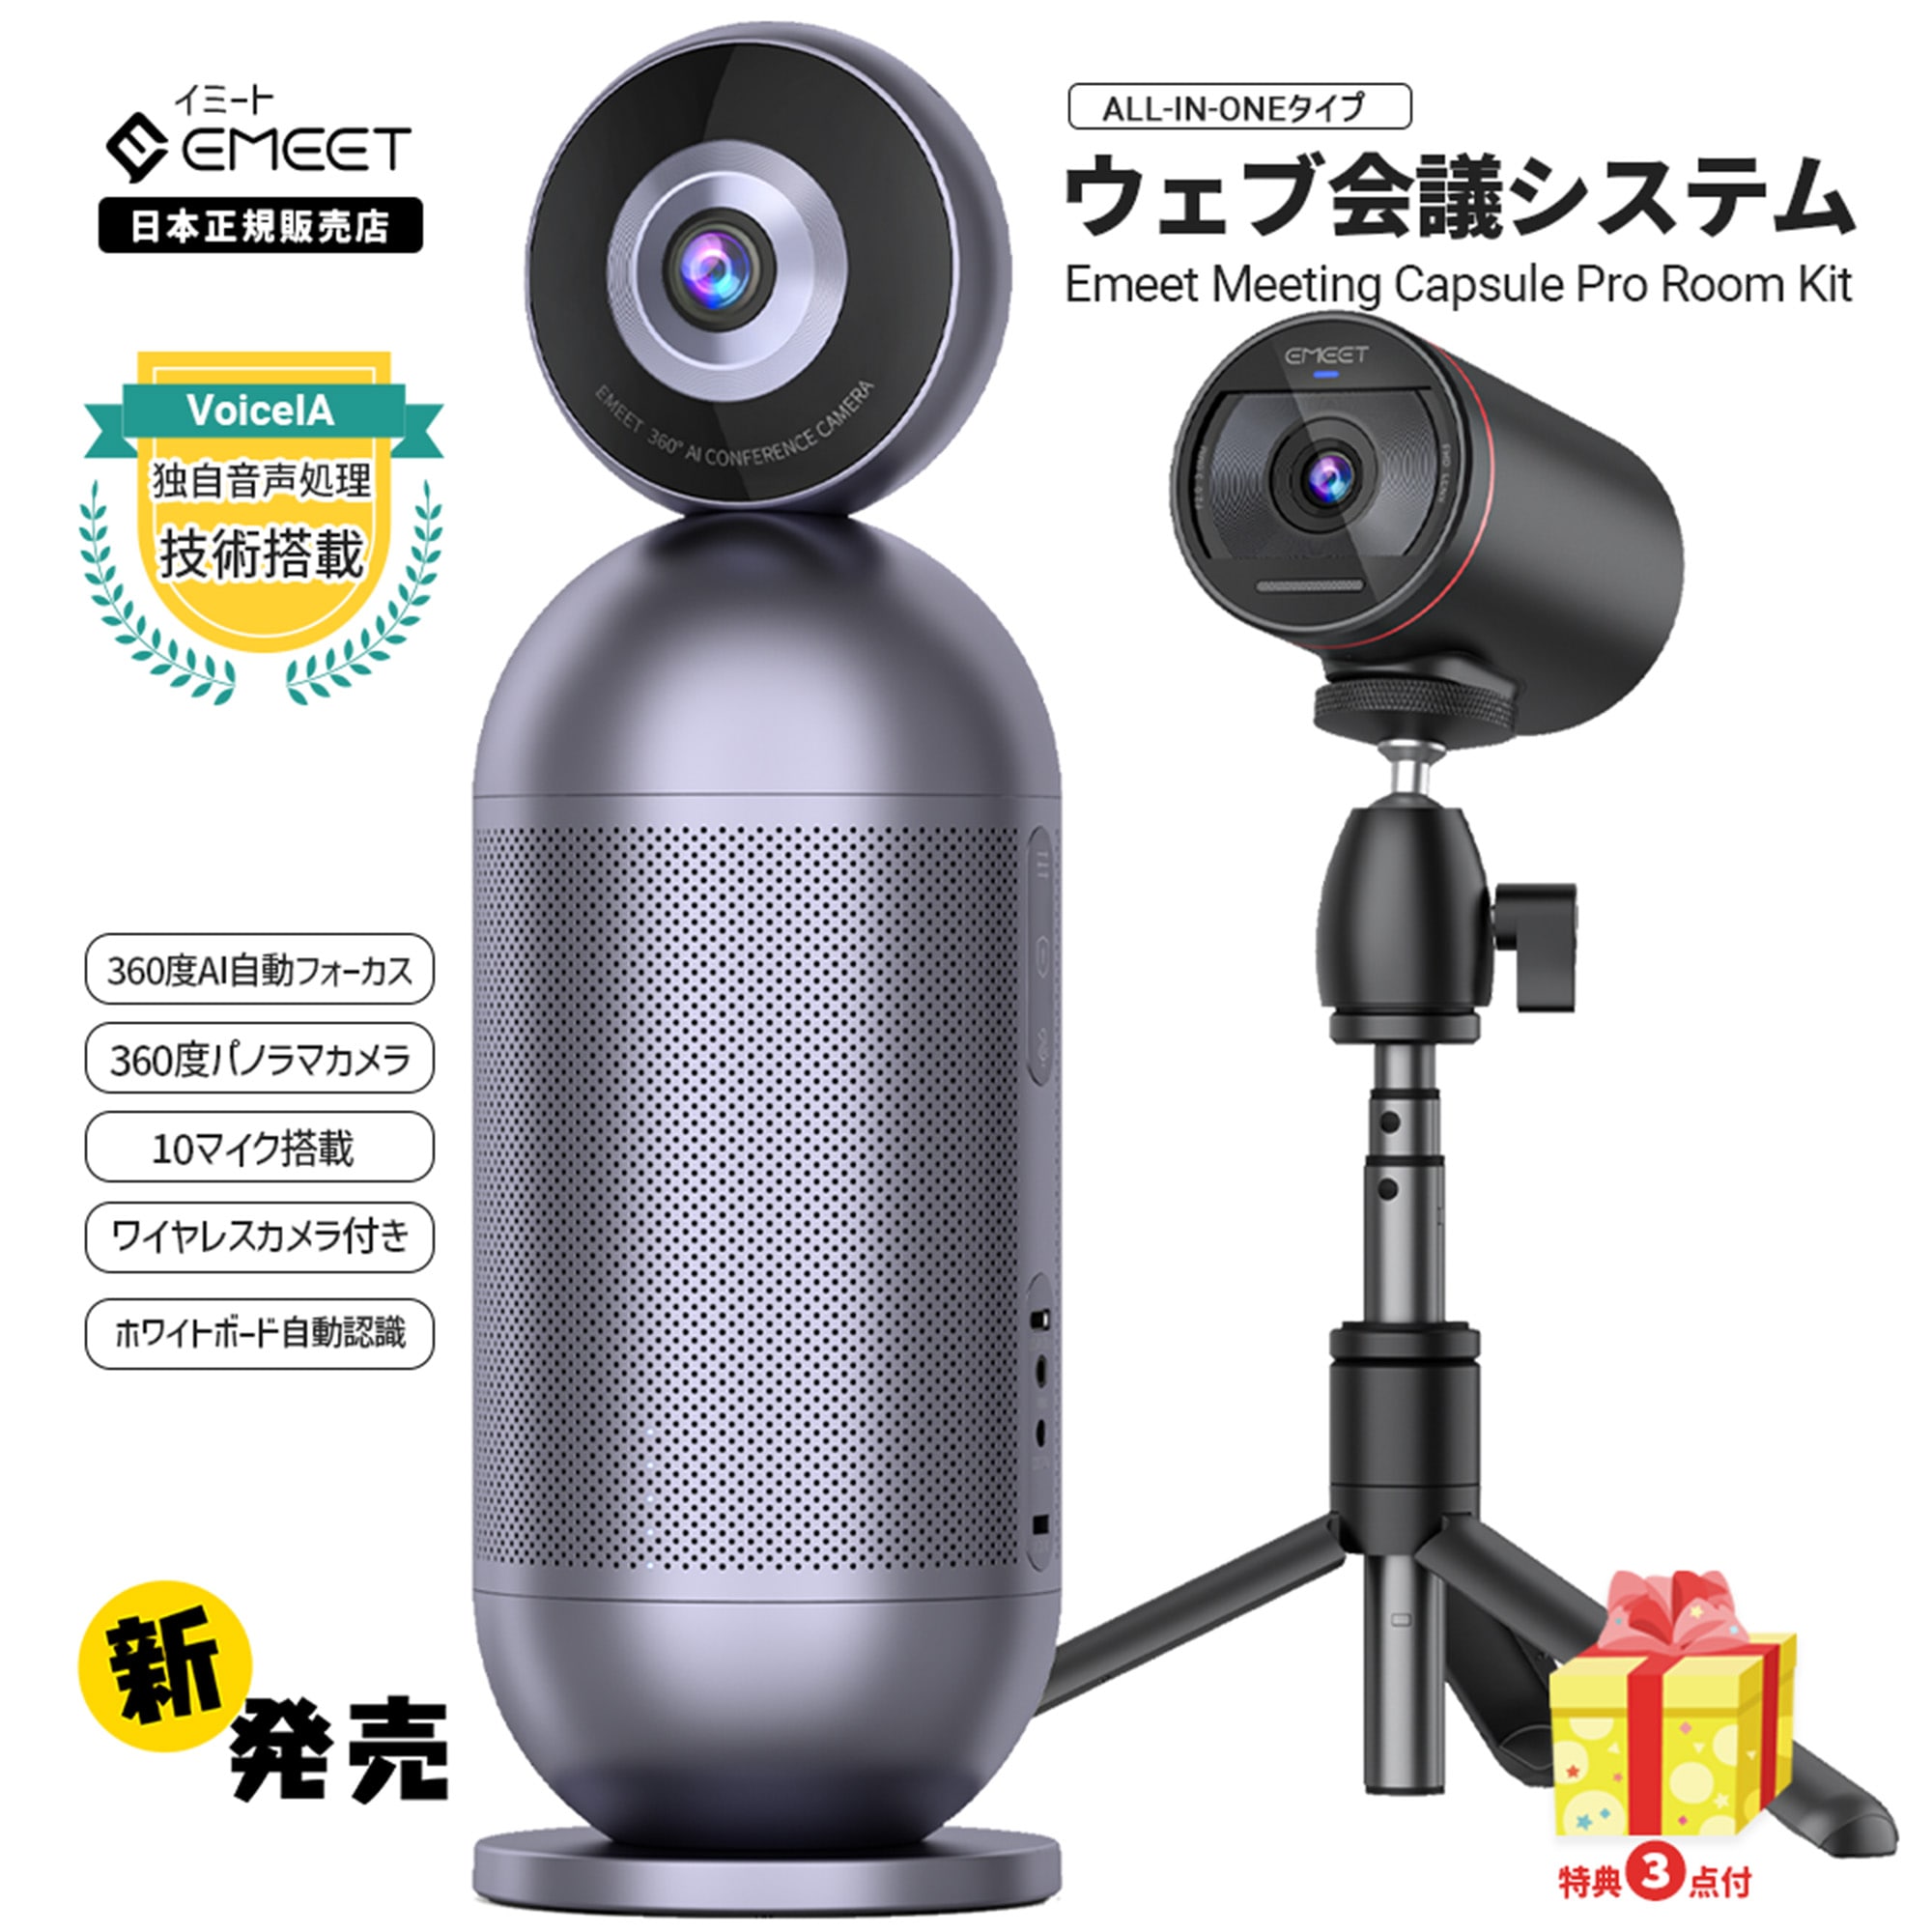 EMEET【日本正規販売店】 会議システム 360度パノラマ ウェブカメラ Meeting Capsule Pro Room Kit ( 360度カメラ + ワイヤレスカメラ) AIフォーカス 10個のマイク